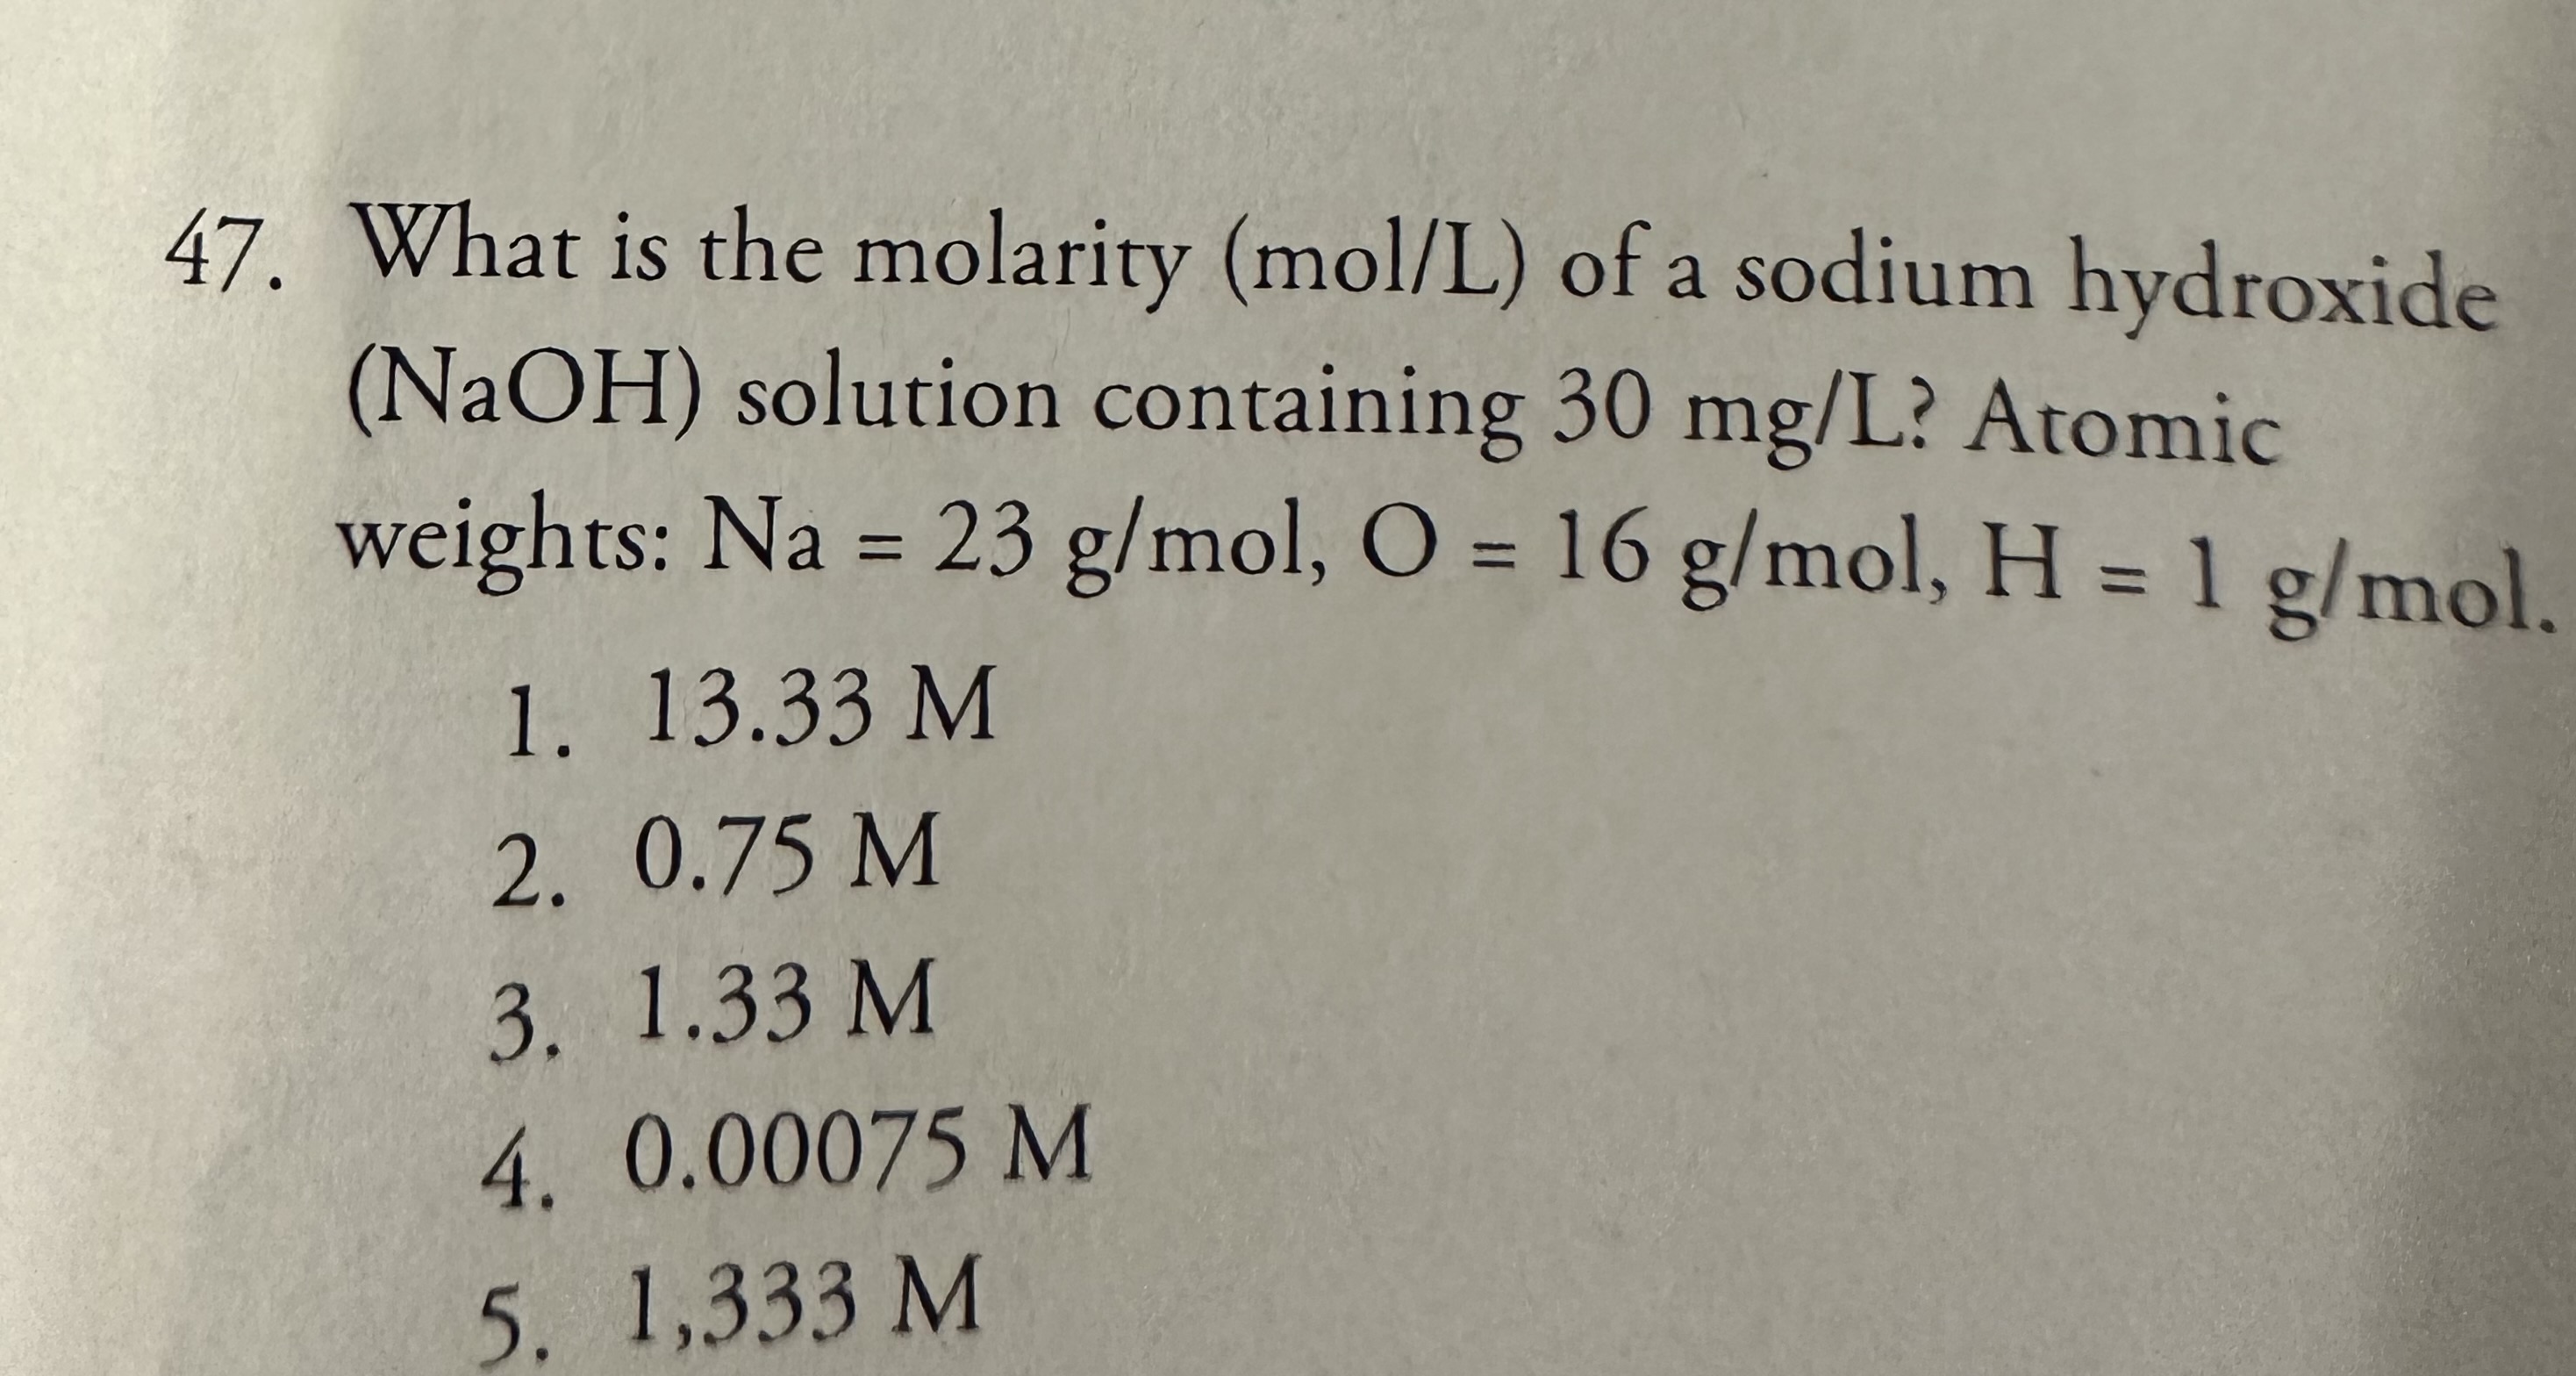 Sodium Hydroxide, NaOH